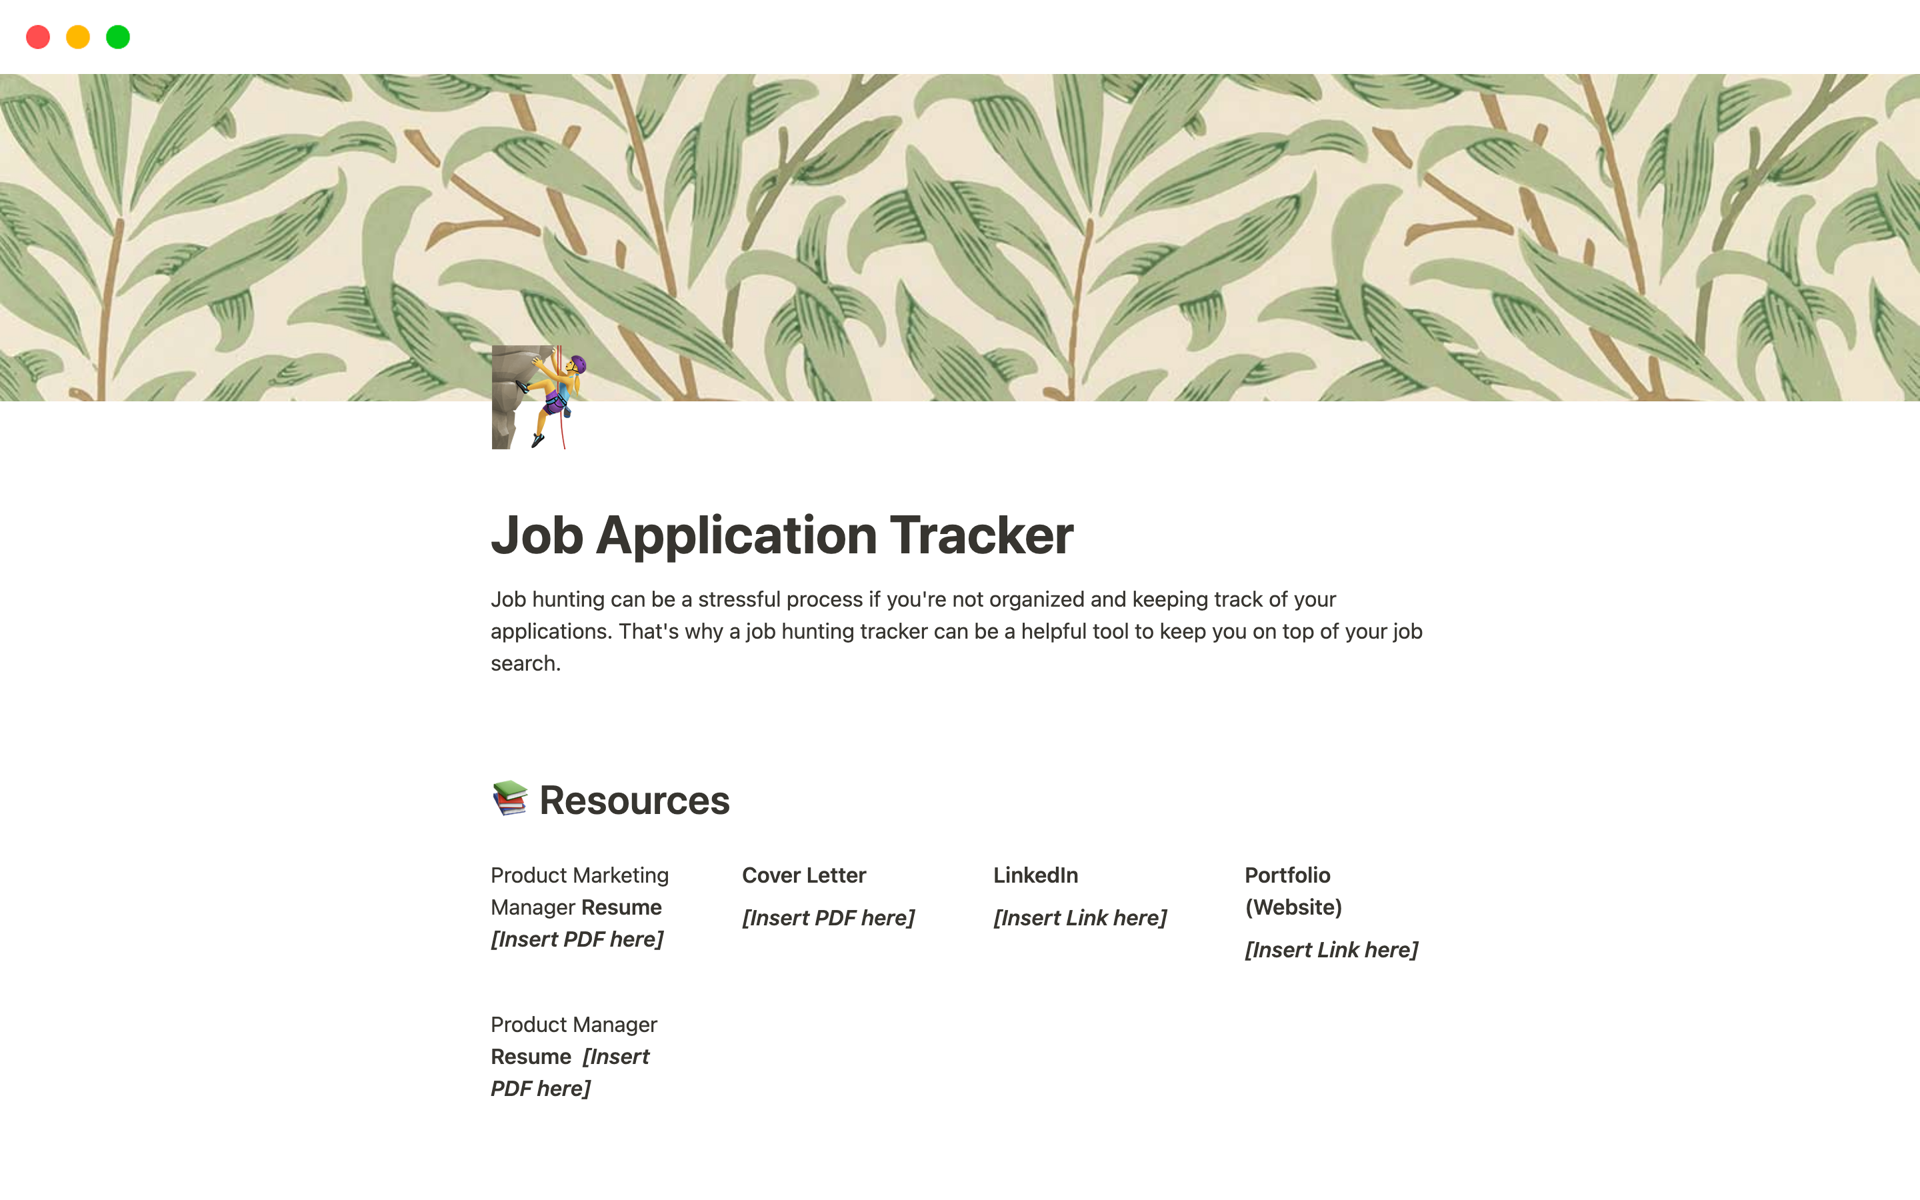 Aperçu du modèle de Job Application Tracker